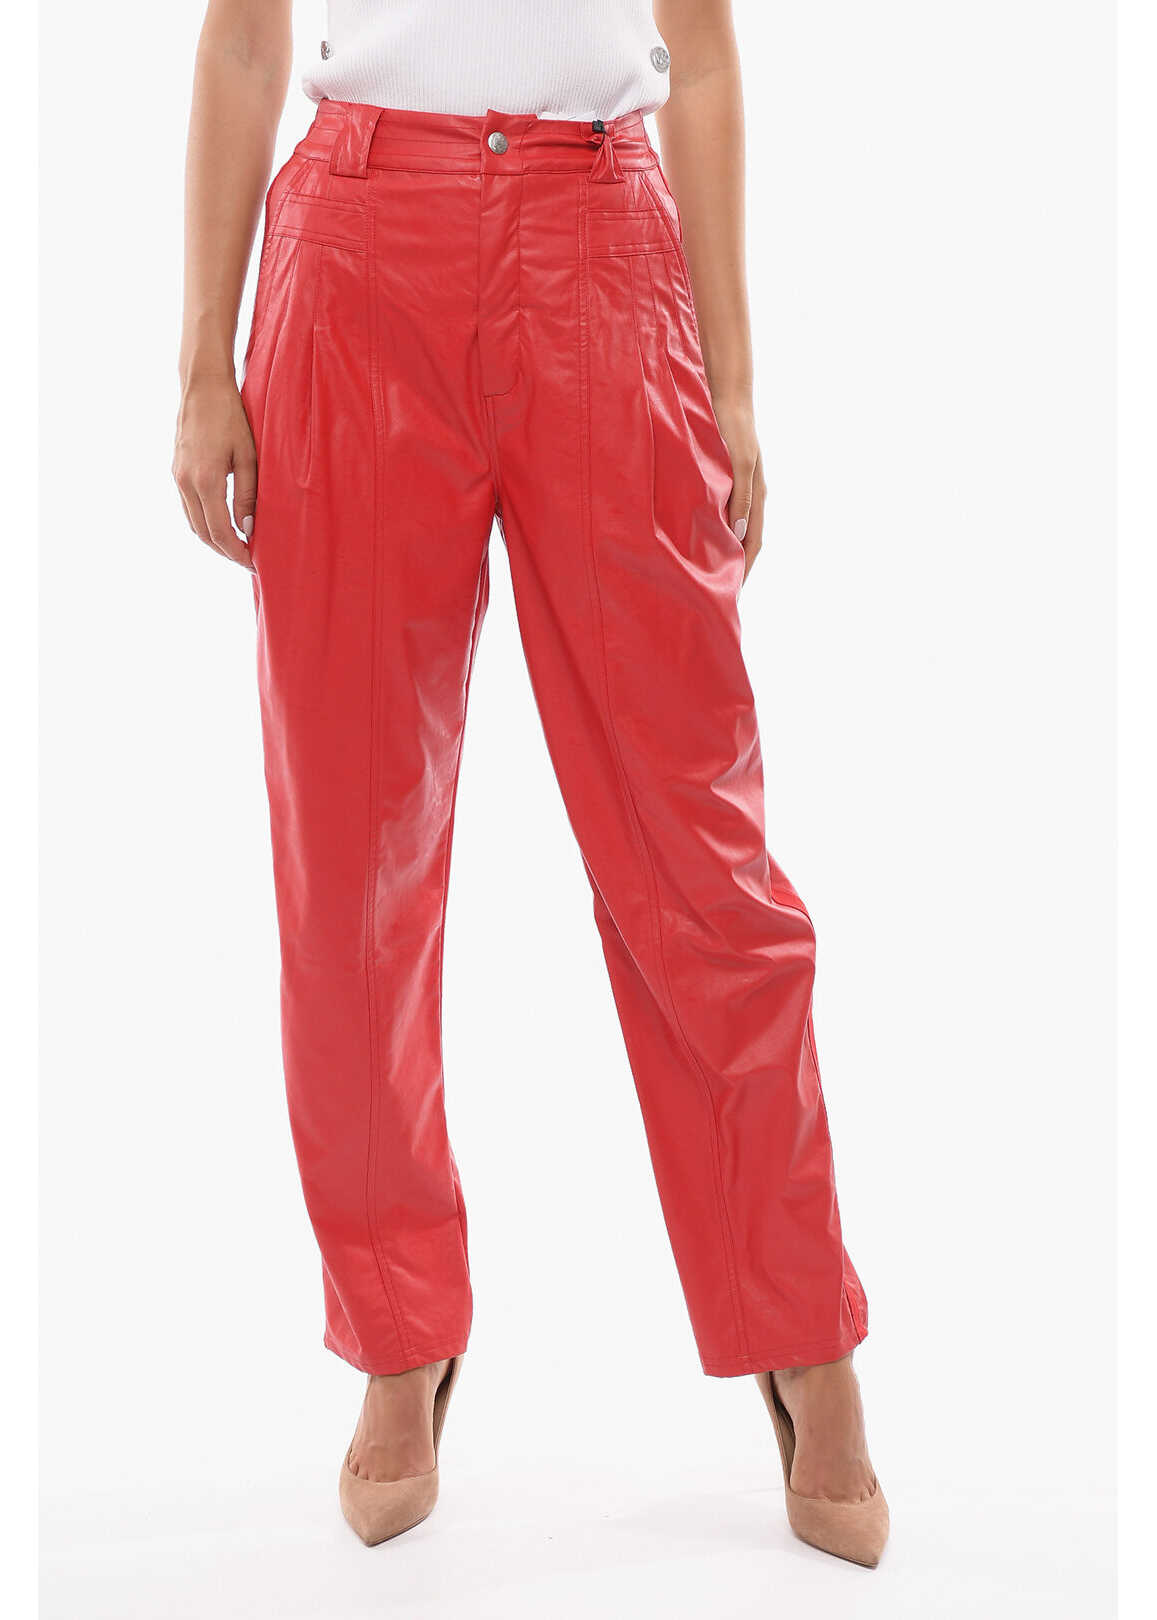 KOCHE 3-Pleat Faux Leather Pants Red